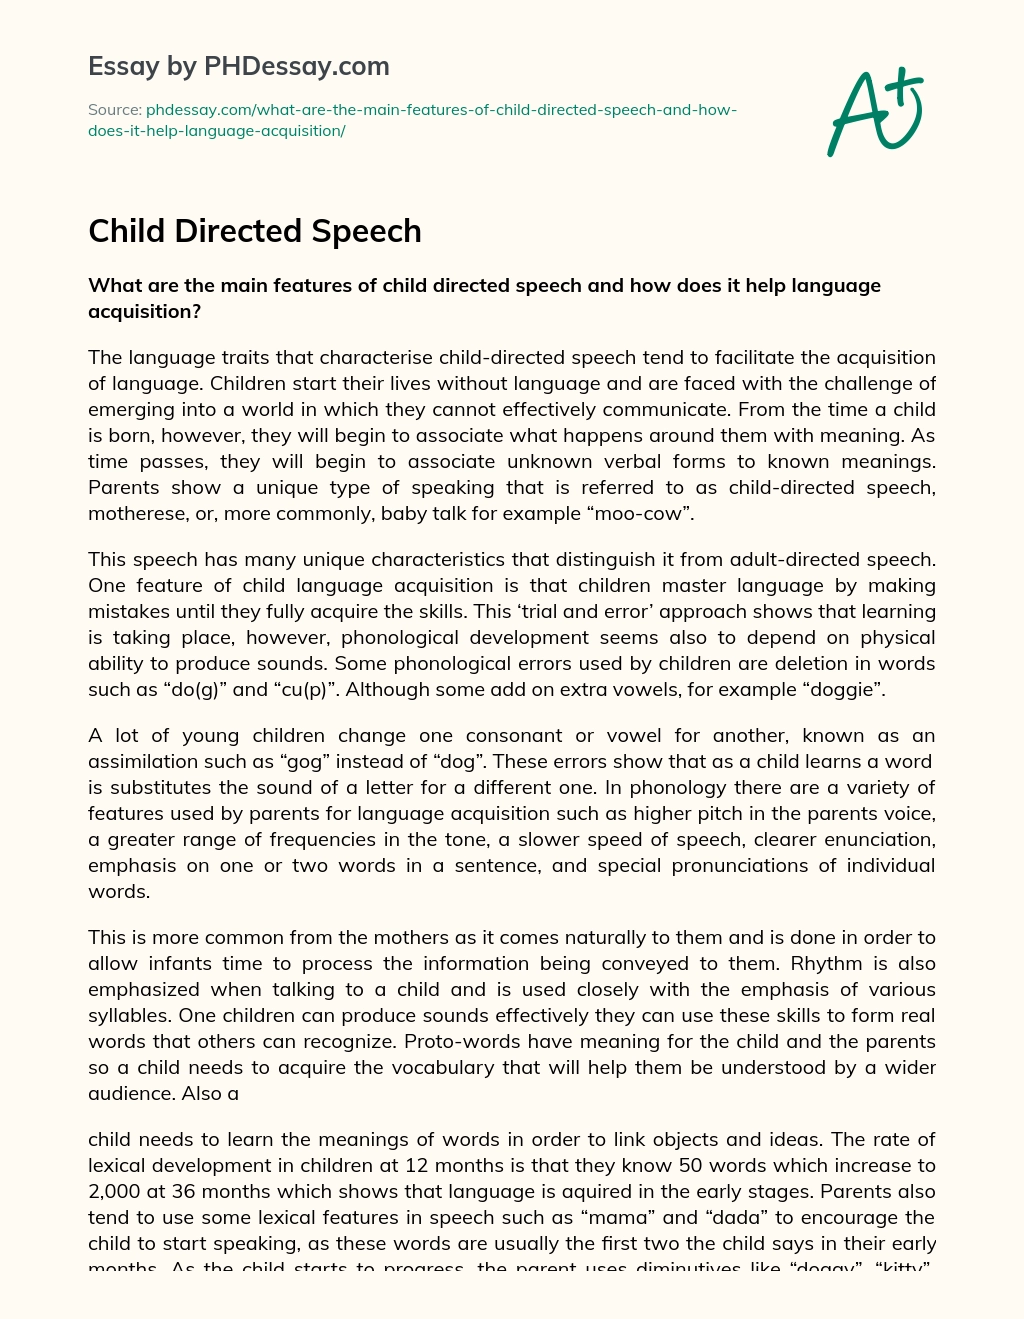 Child Directed Speech essay